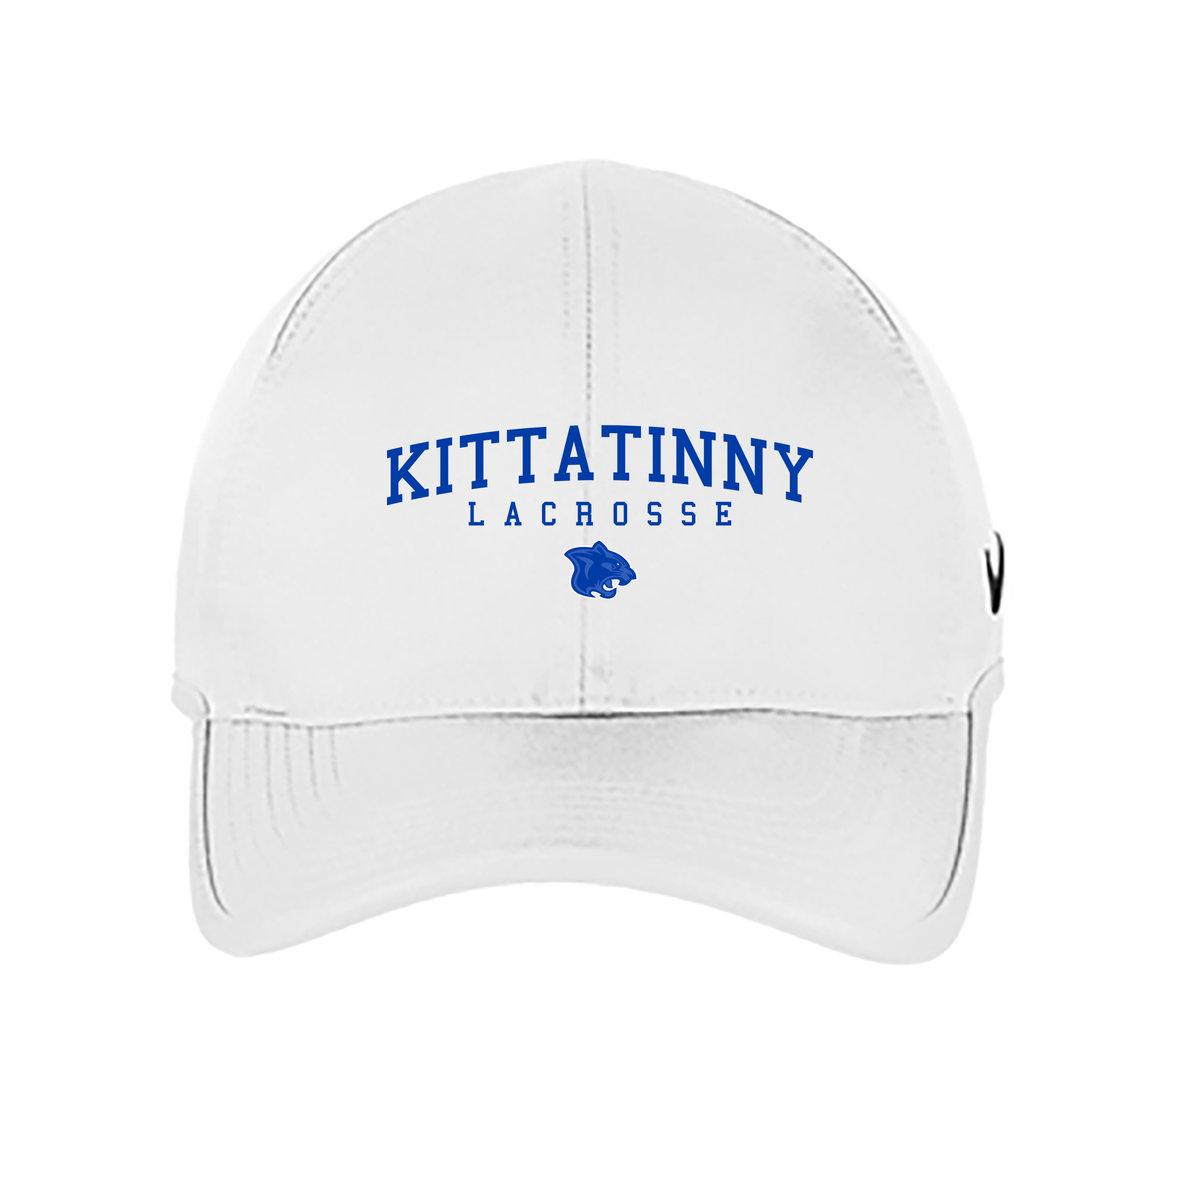 Kittatinny Lacrosse Nike Featherlight Cap